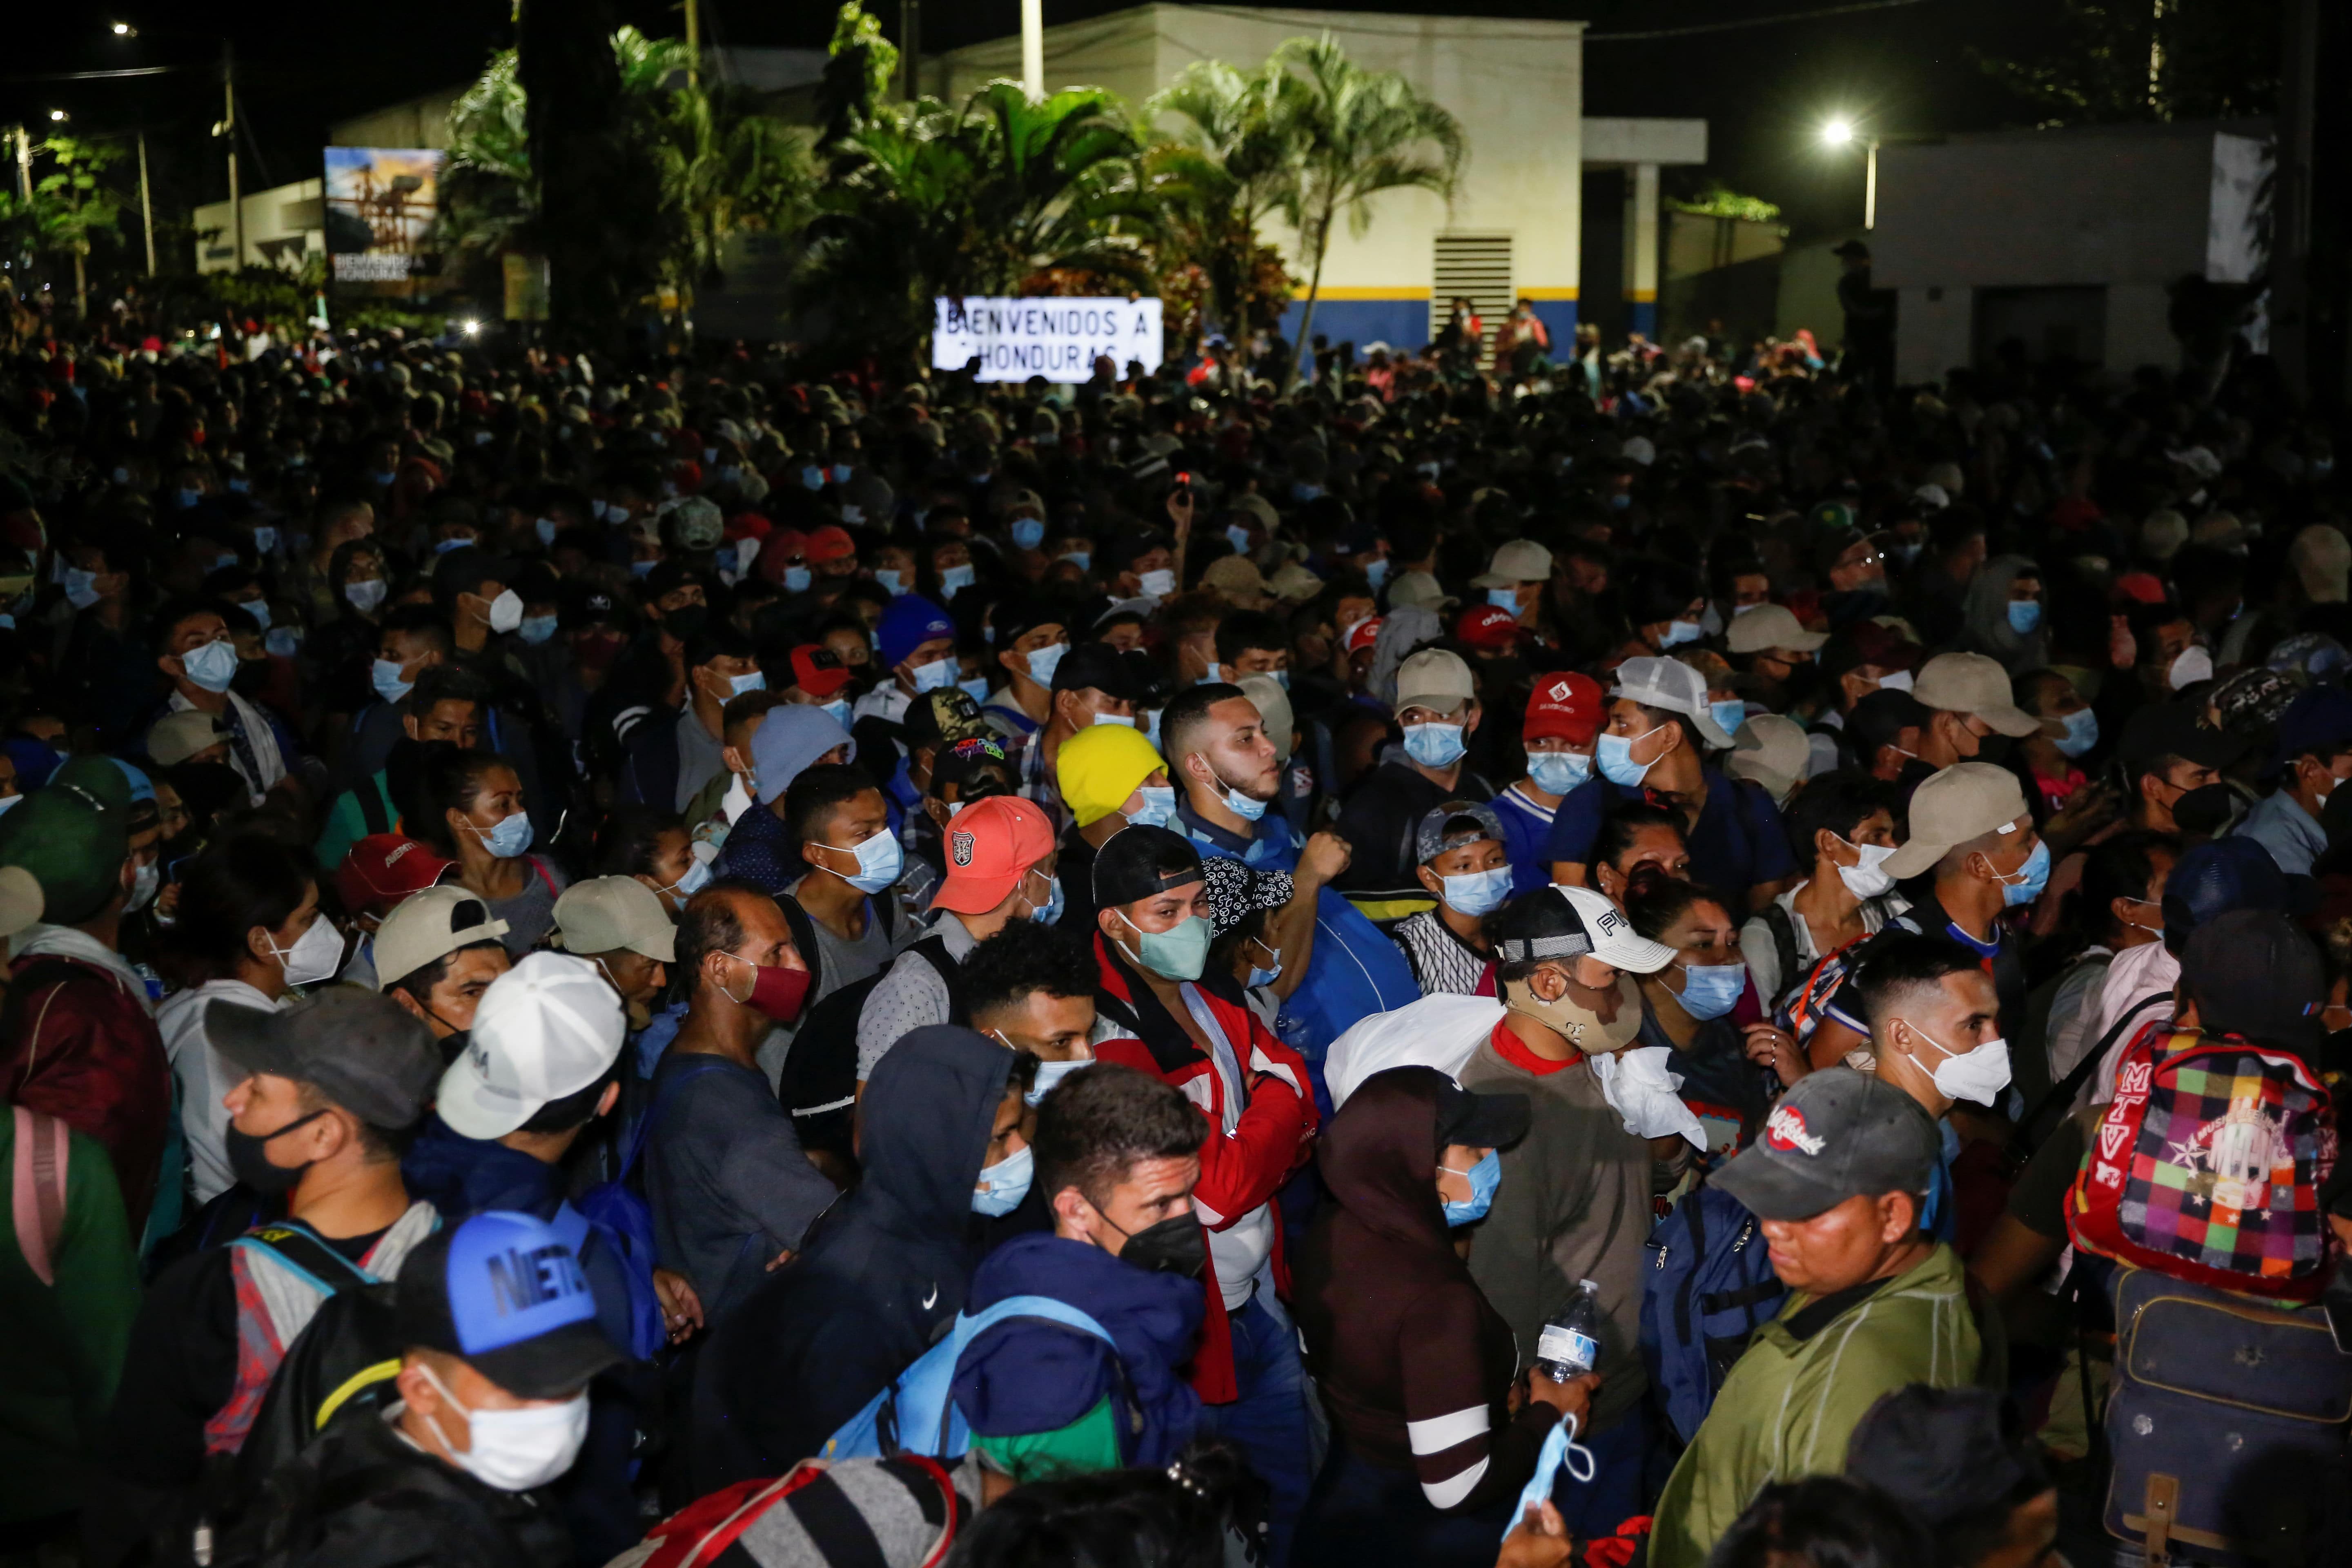 Some 6,500 Honduran migrants in caravans traveling north to Guatemala, officials estimate